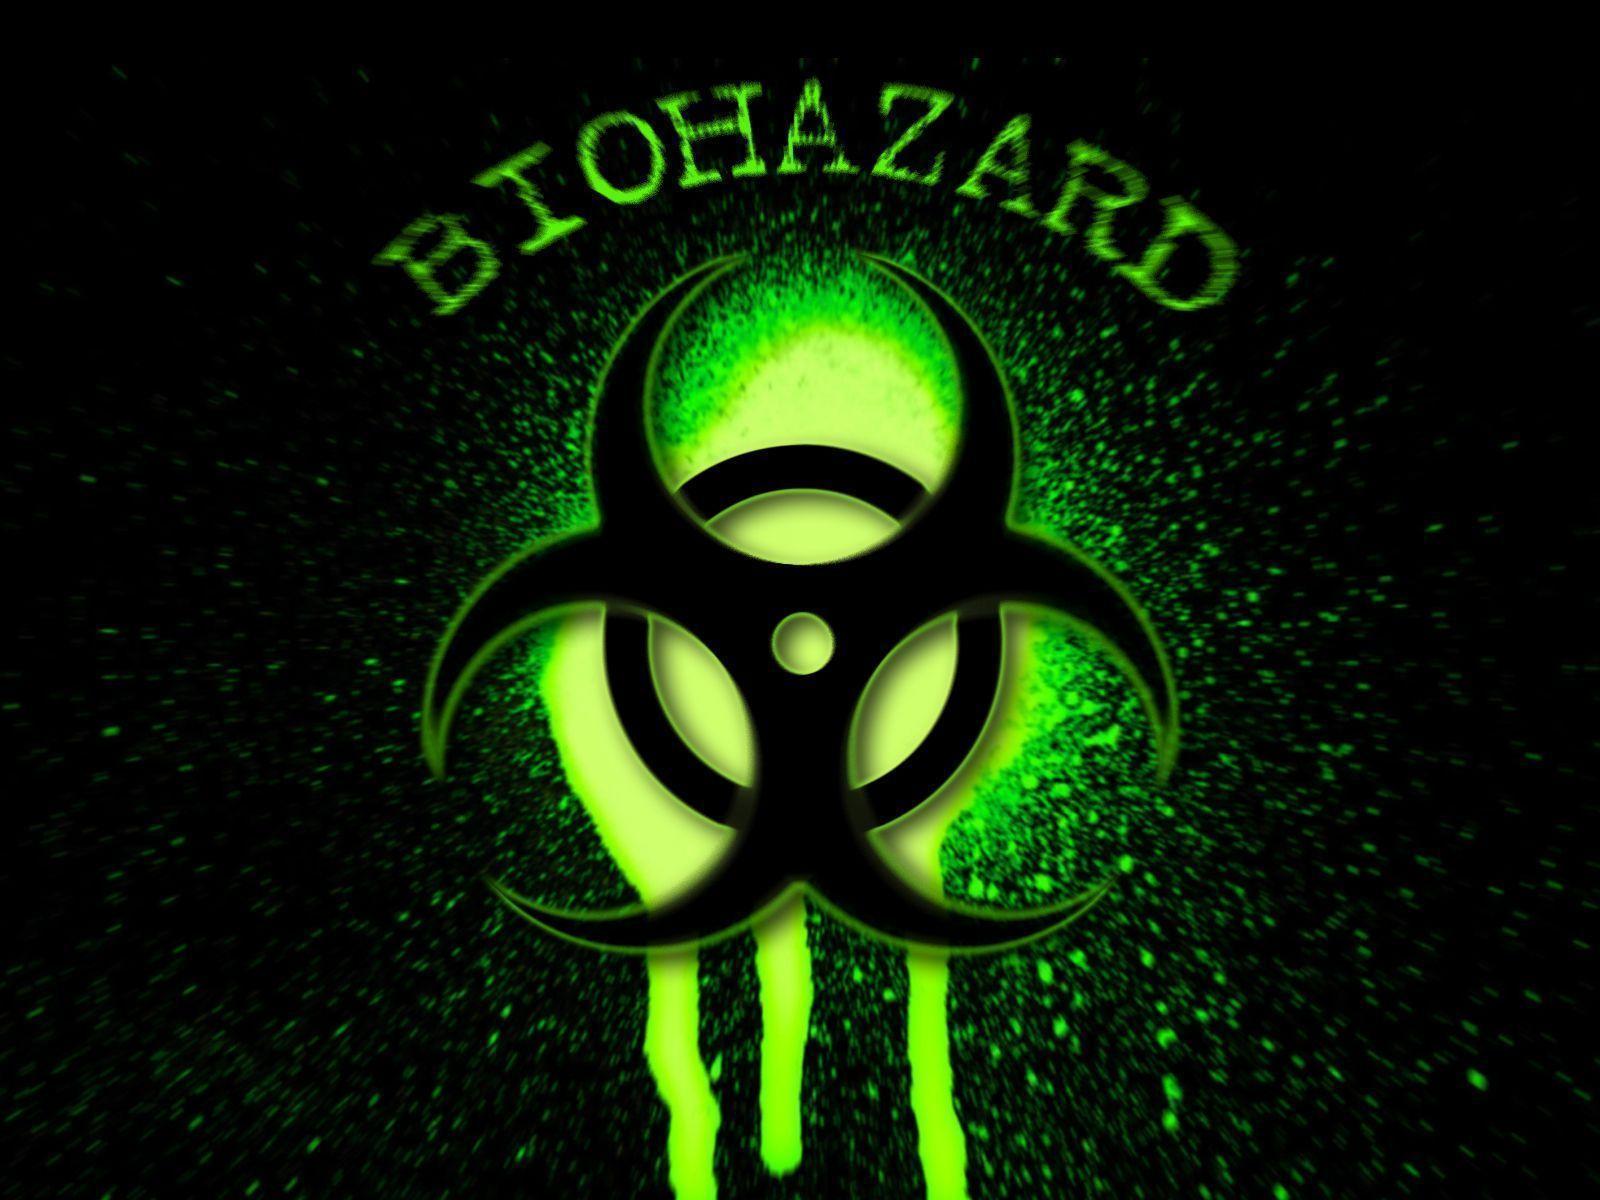 Logos For > Biohazard Sign Wallpapers